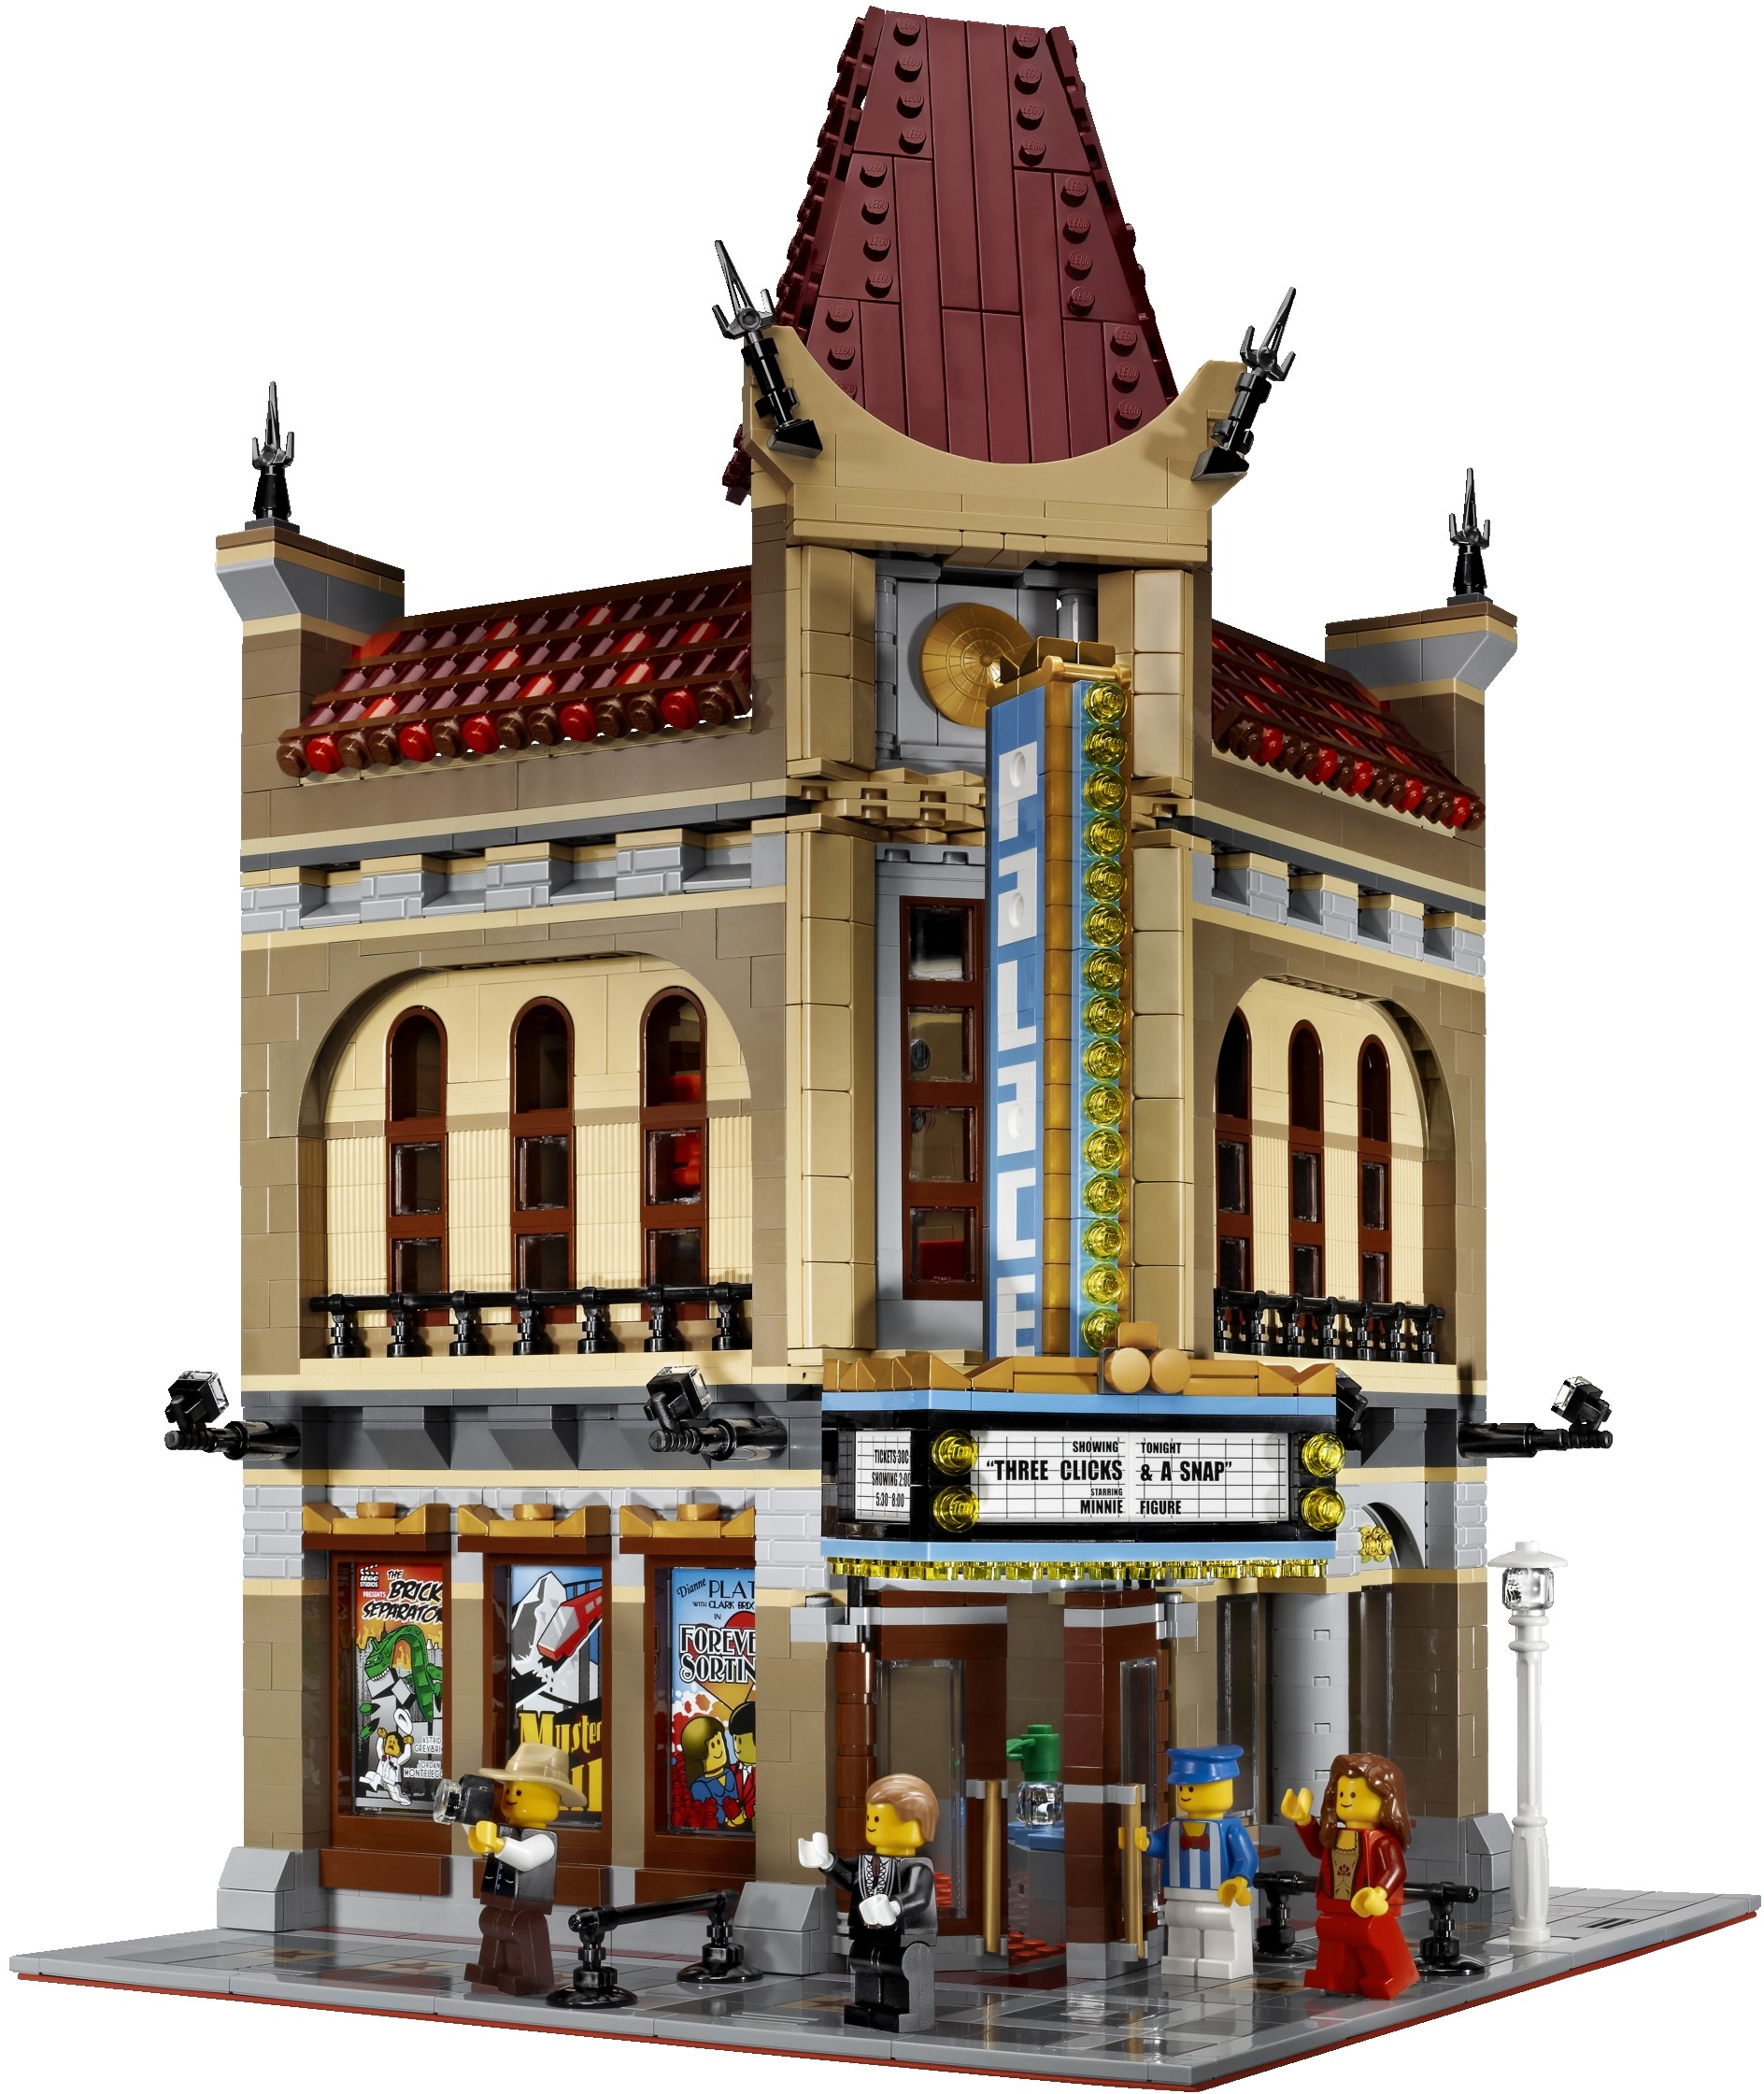 Rute gele udslæt LEGO Creator Expert Modular Buildings Collection | Brickset